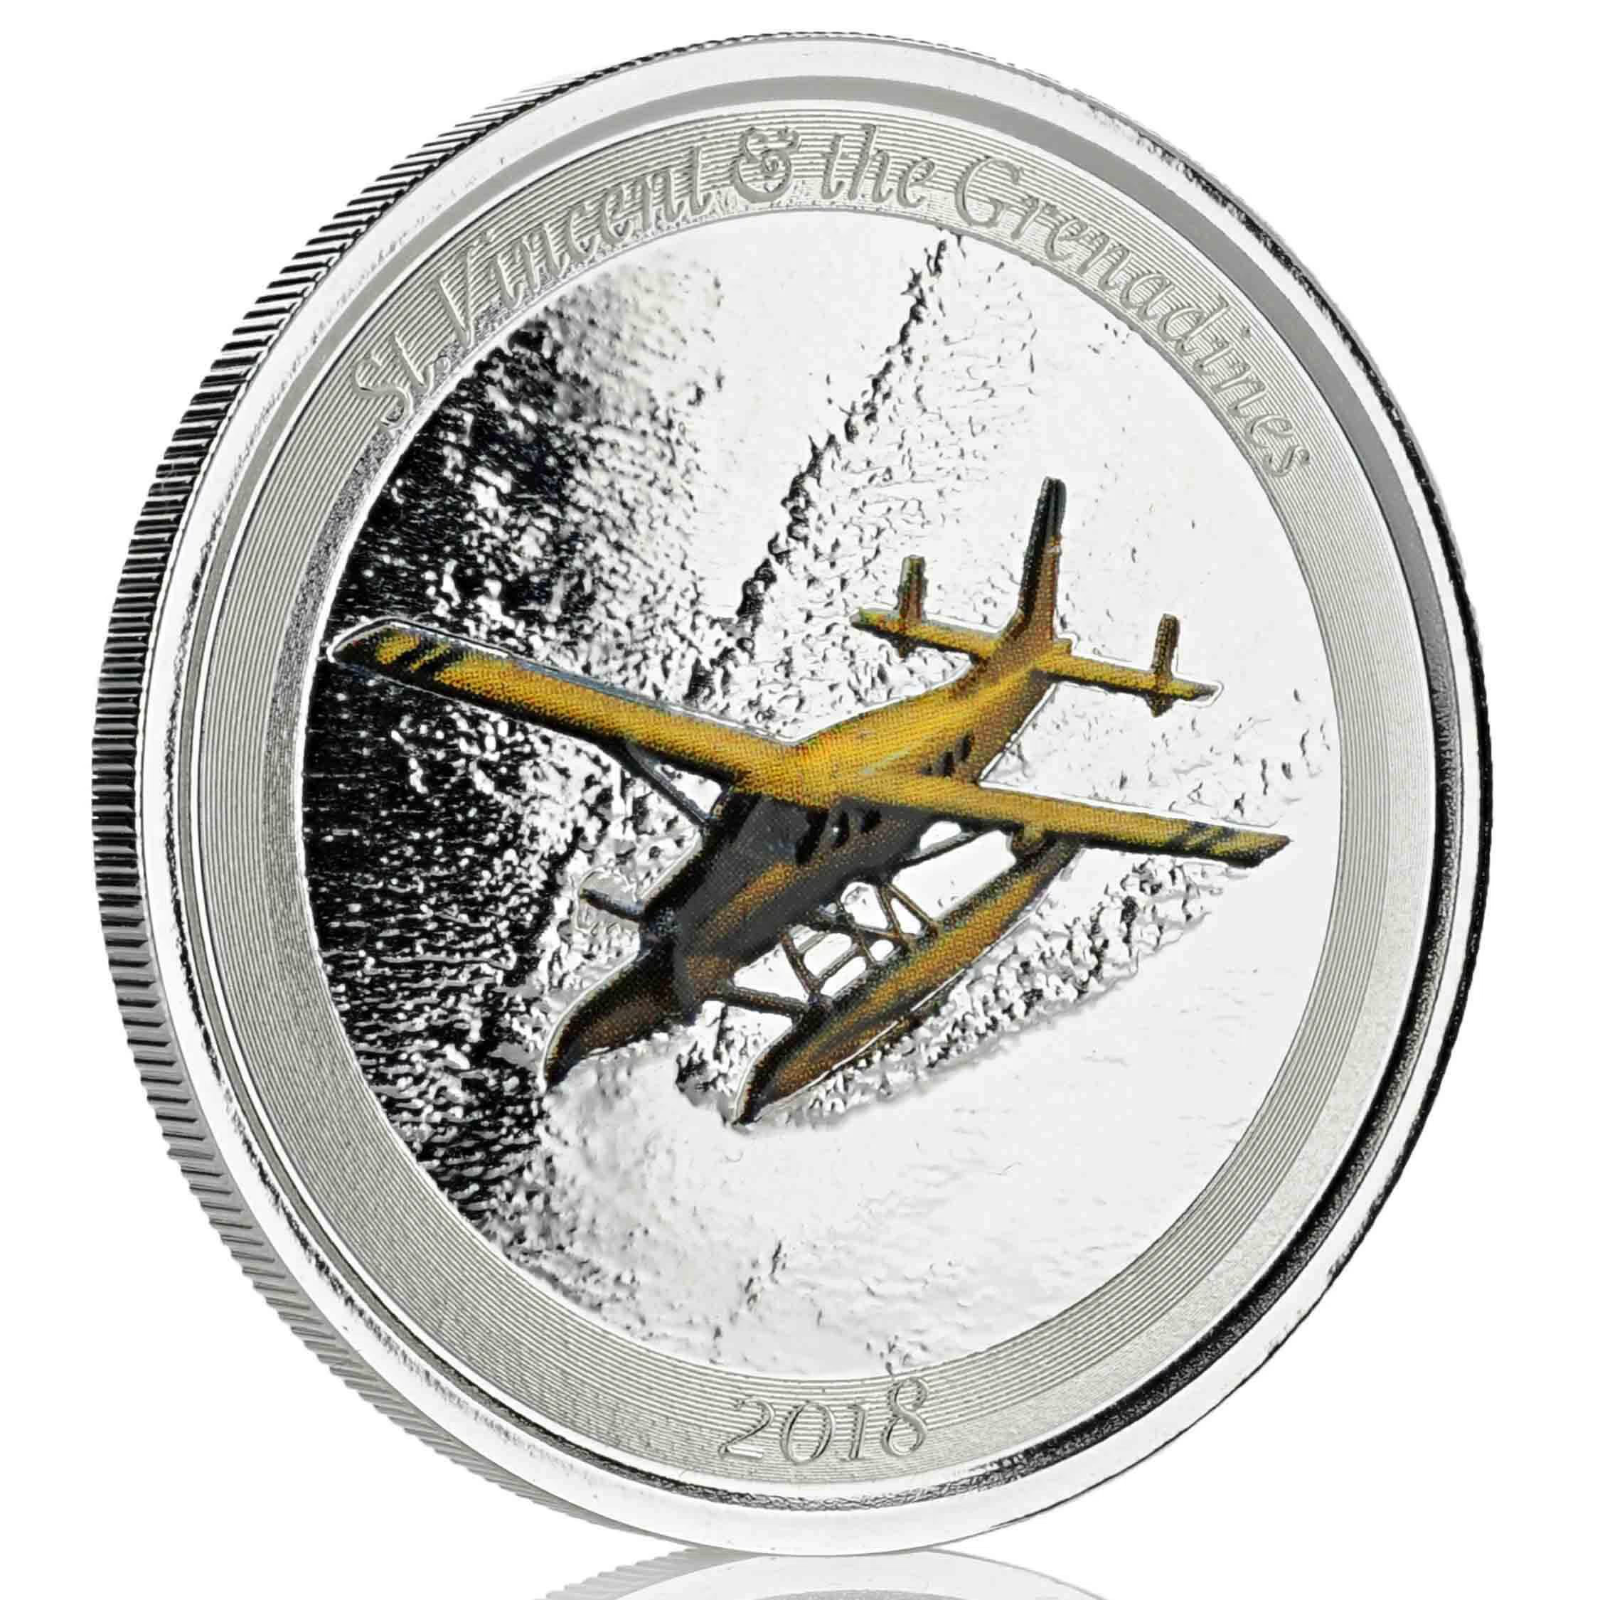 1 Oz Silver Coin 2018 EC8 St. Vincent & the Grenadines $2 Color Proof - Seaplane-classypw.com-1